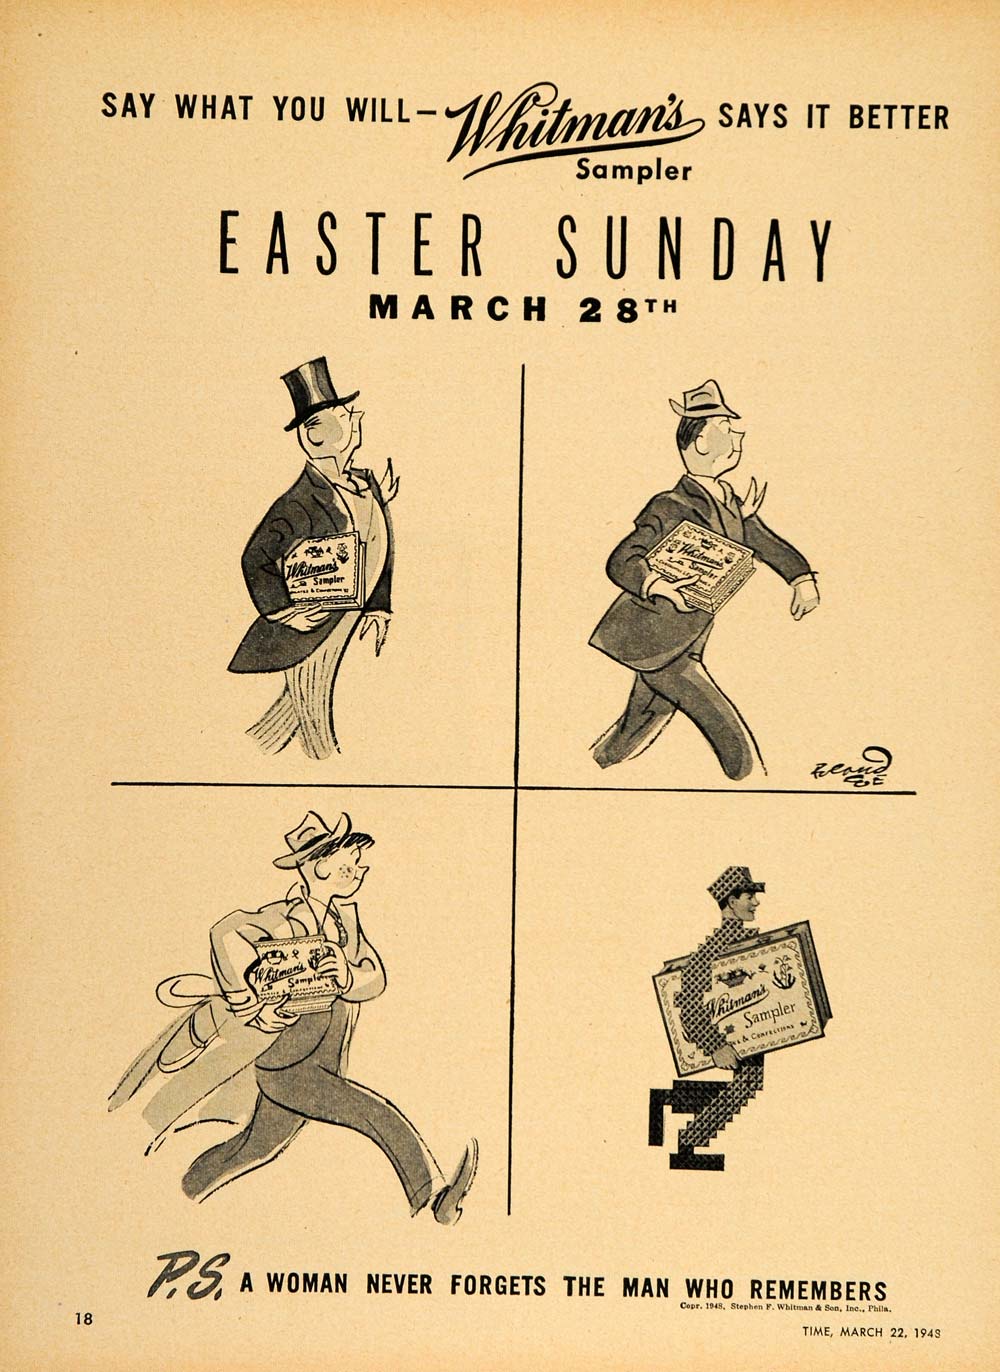 1948 Ad Whitman's Sampler Chocolates Box Easter Cartoon - ORIGINAL TM1